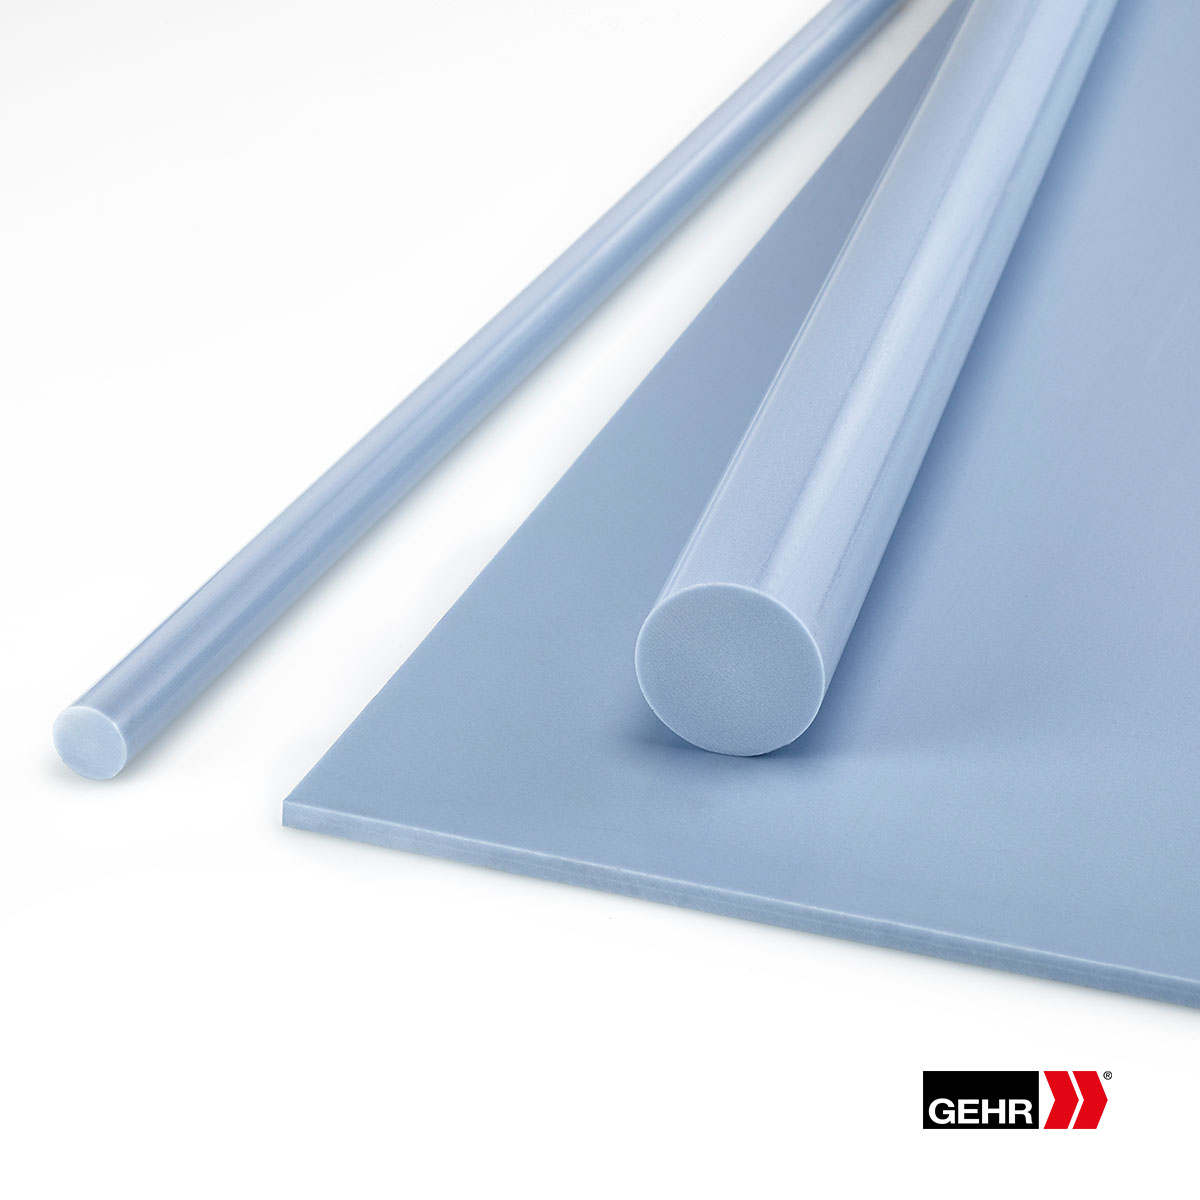 GLIDE-GEHR POM-10PE Sheets 1000 x 50 mm light blue